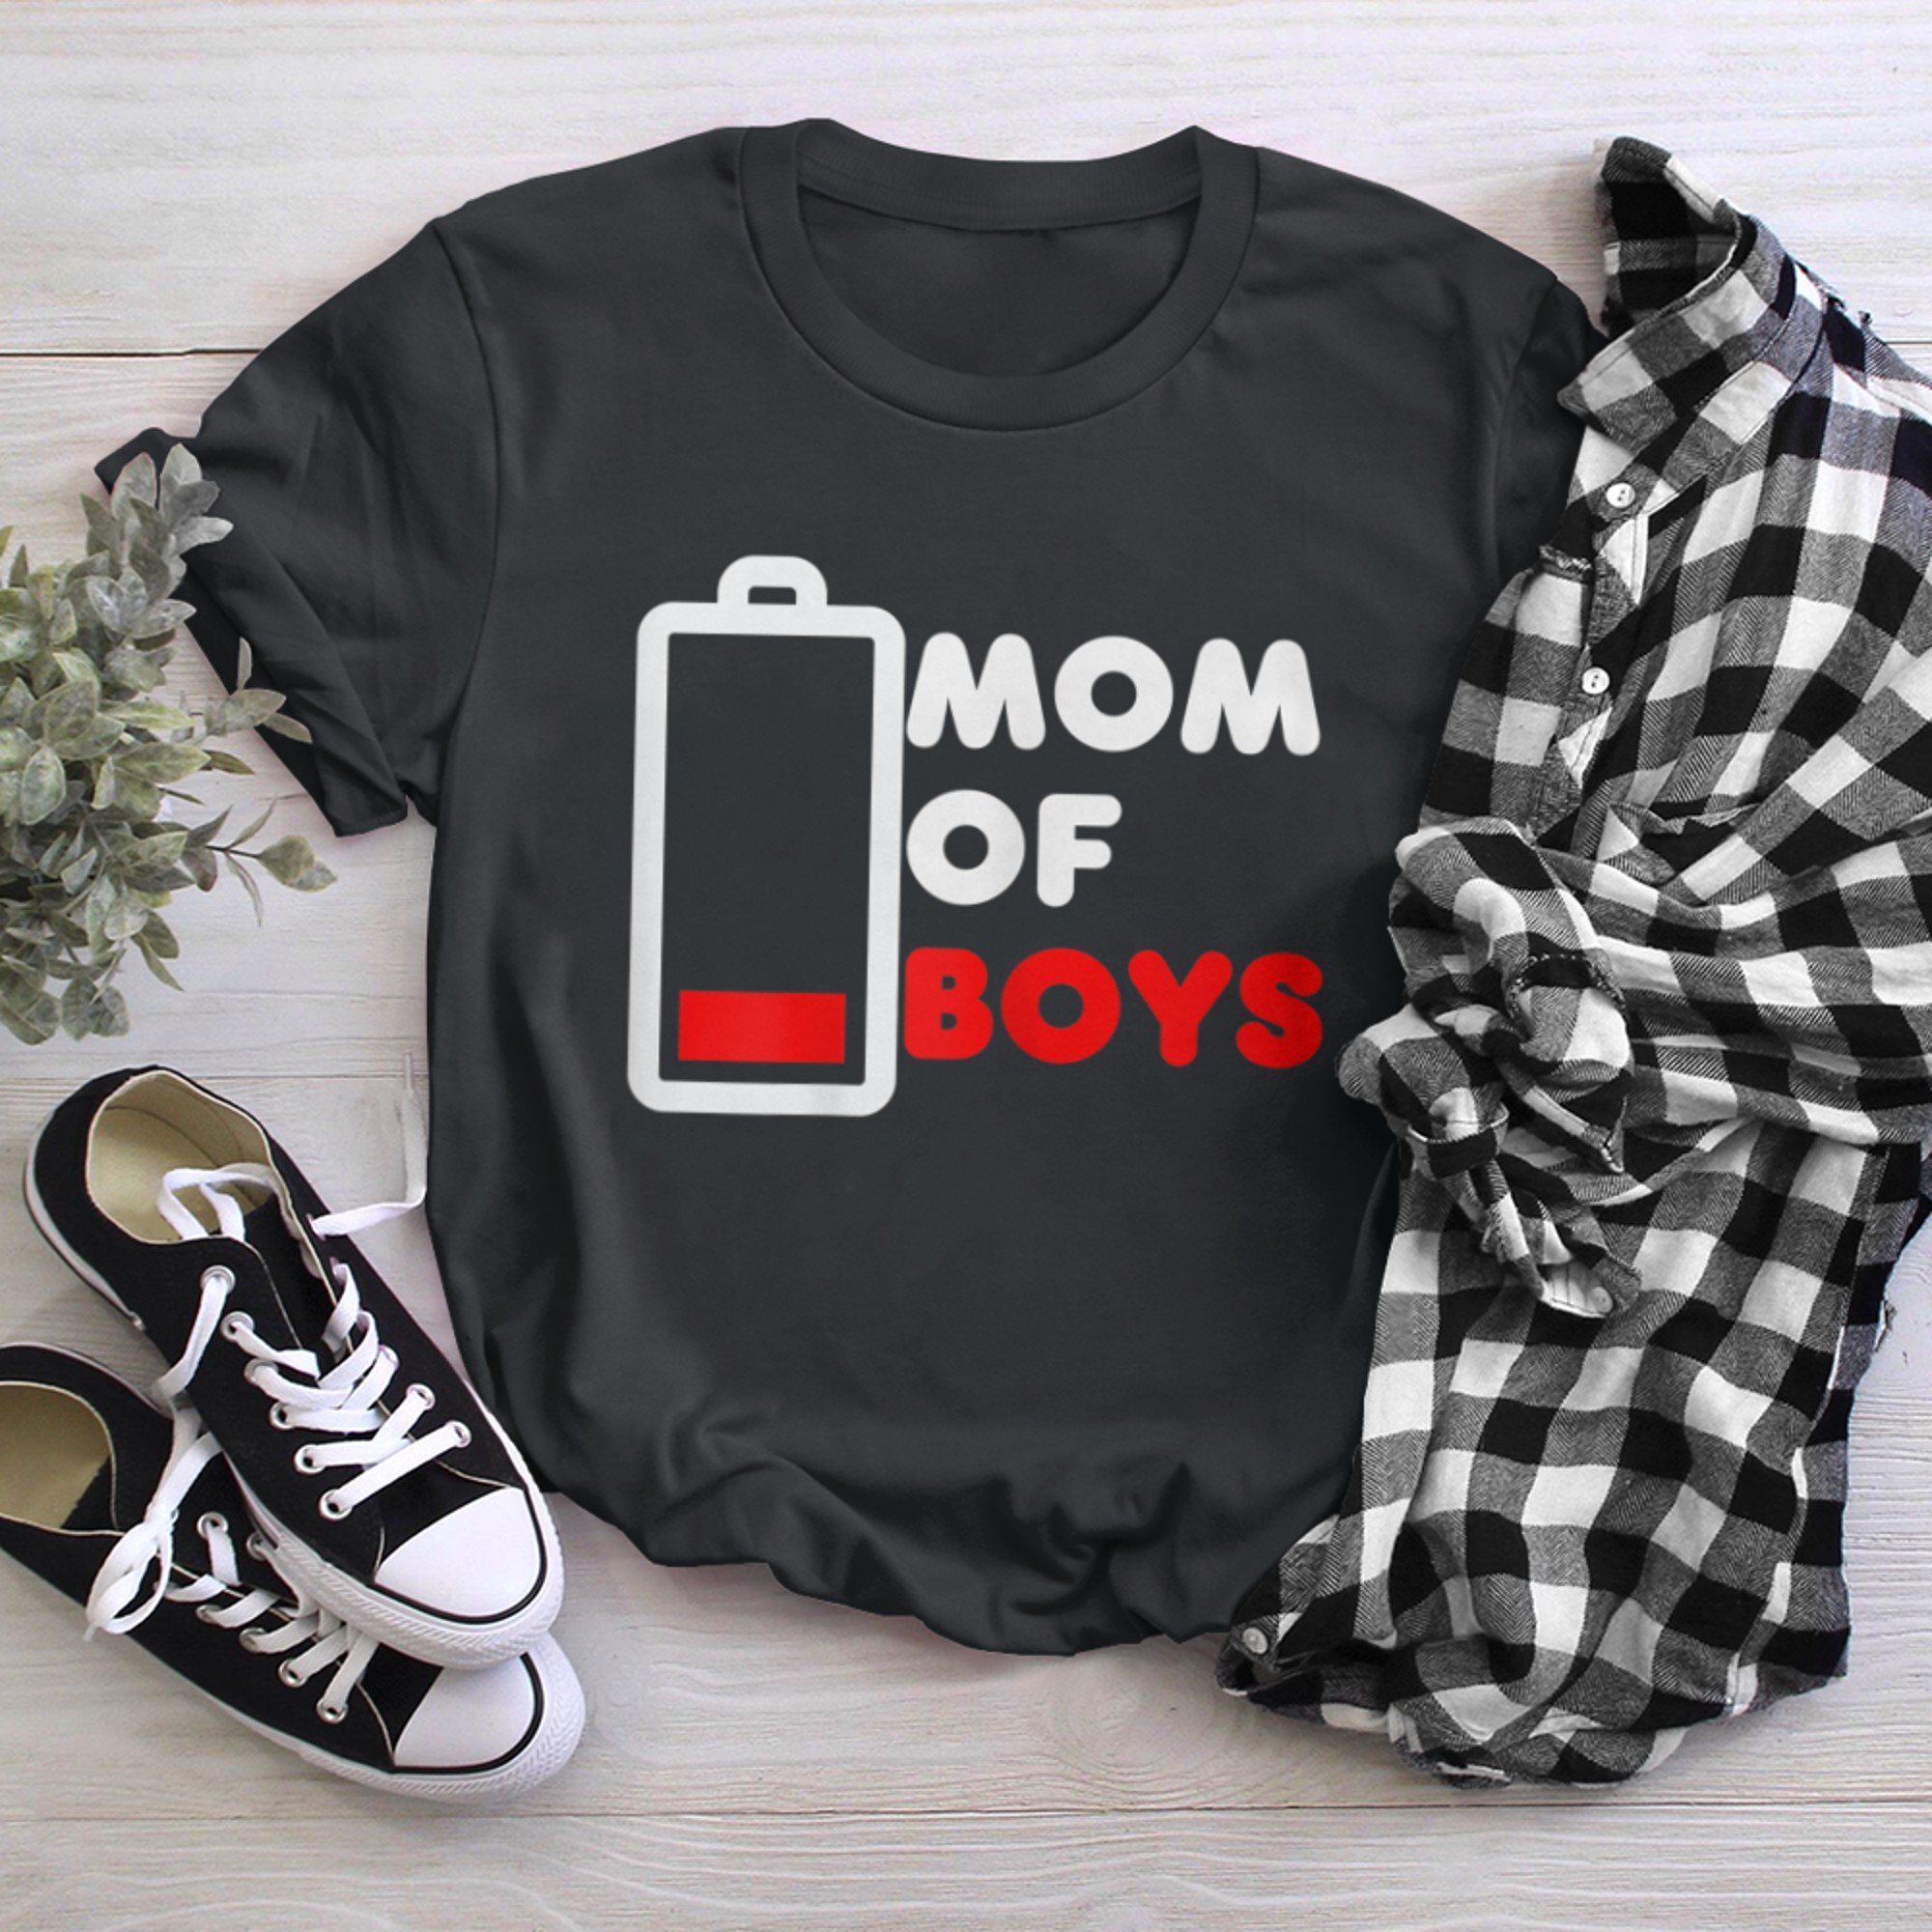 Mom of Mothers Day Birthday t-shirt black